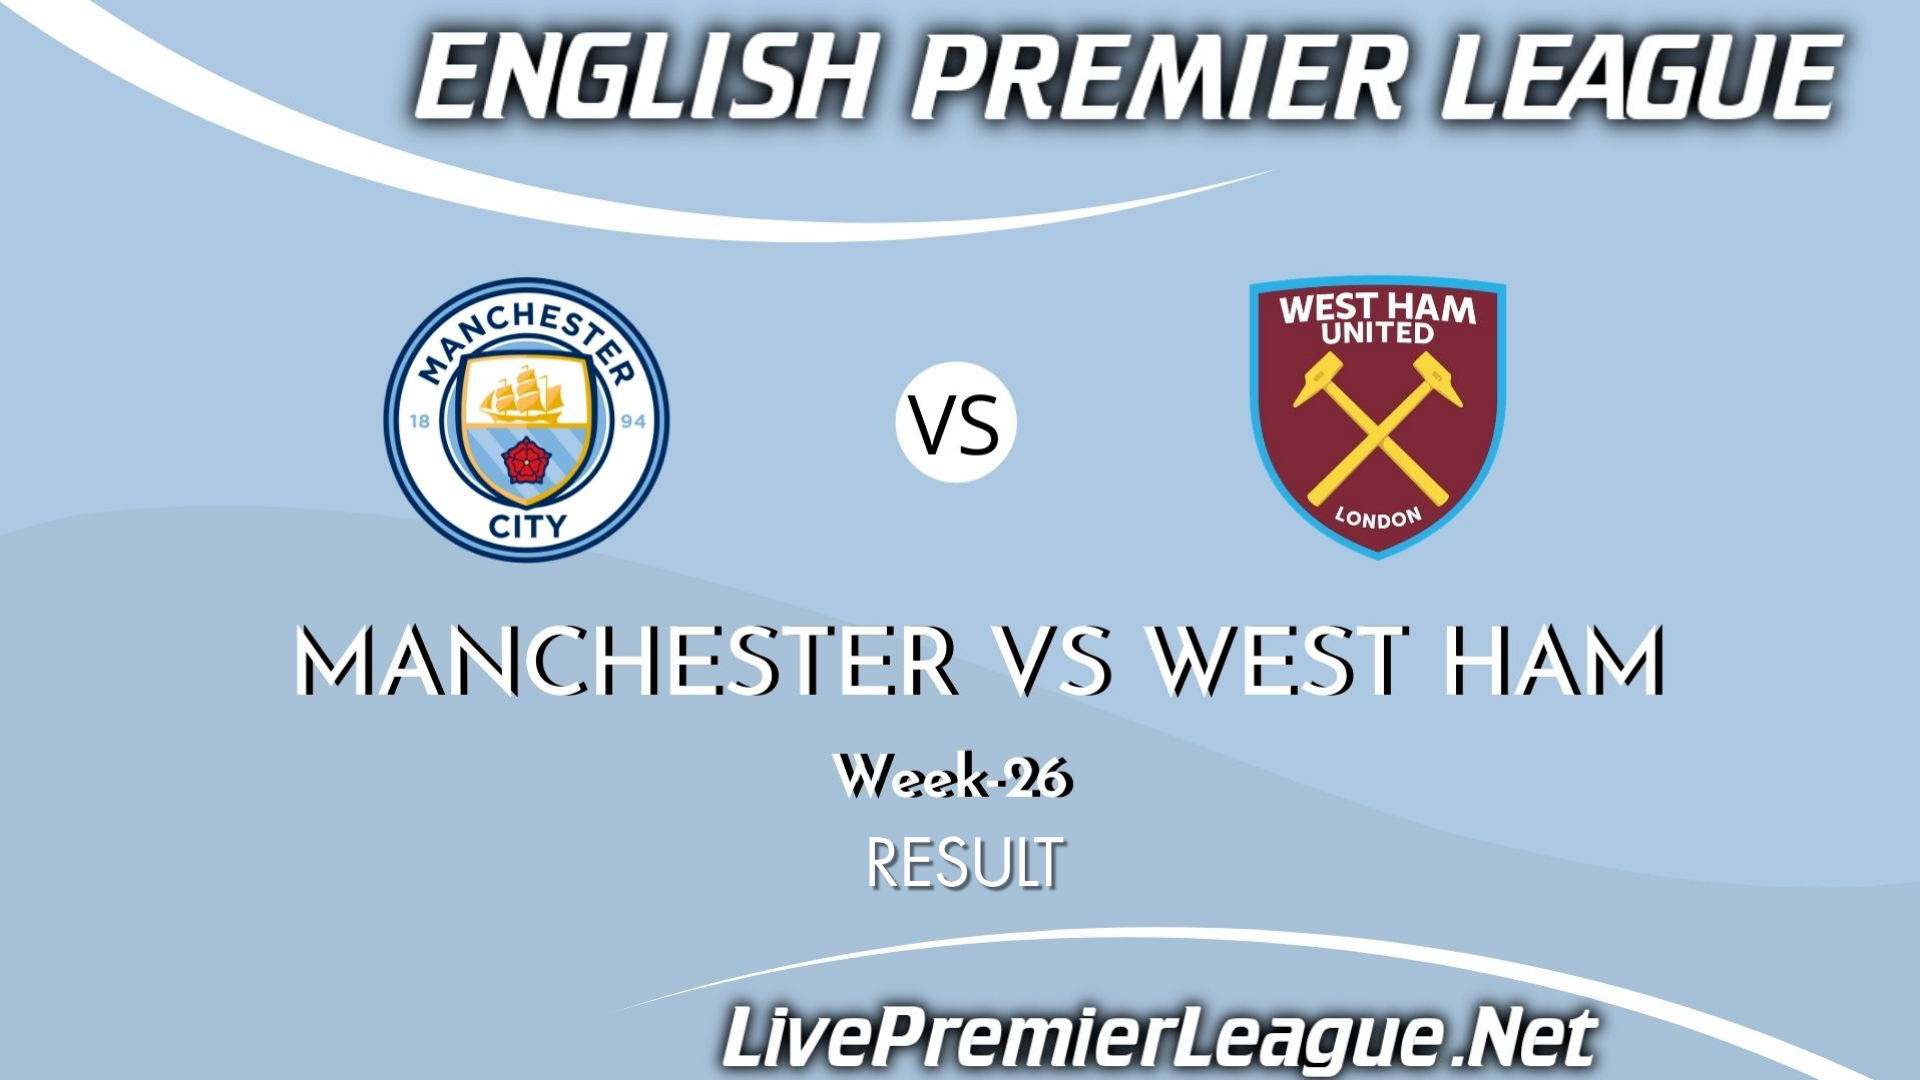 Manchester City Vs West Ham United | Result 2021 EPL Week 26